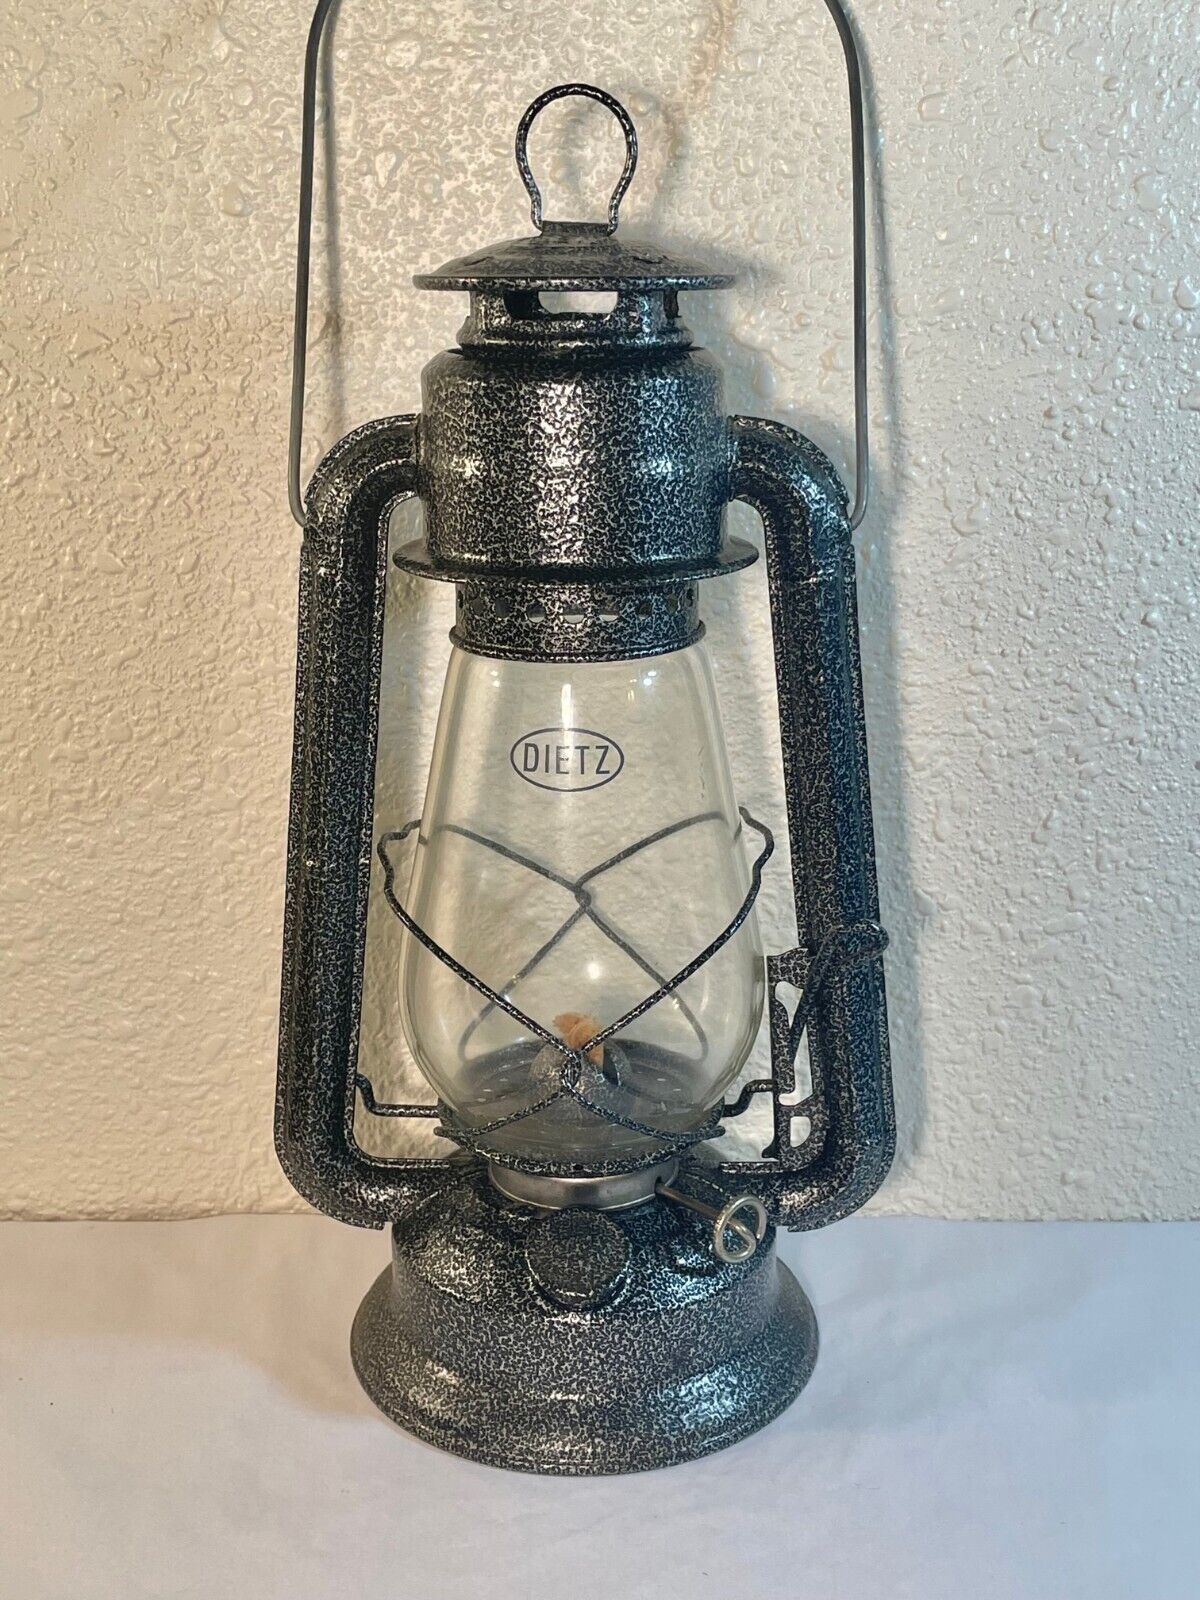 Vintage Dietz Junior No. 20 Metal & Glass Lantern / Oil Lamp, Hangable Antiqued